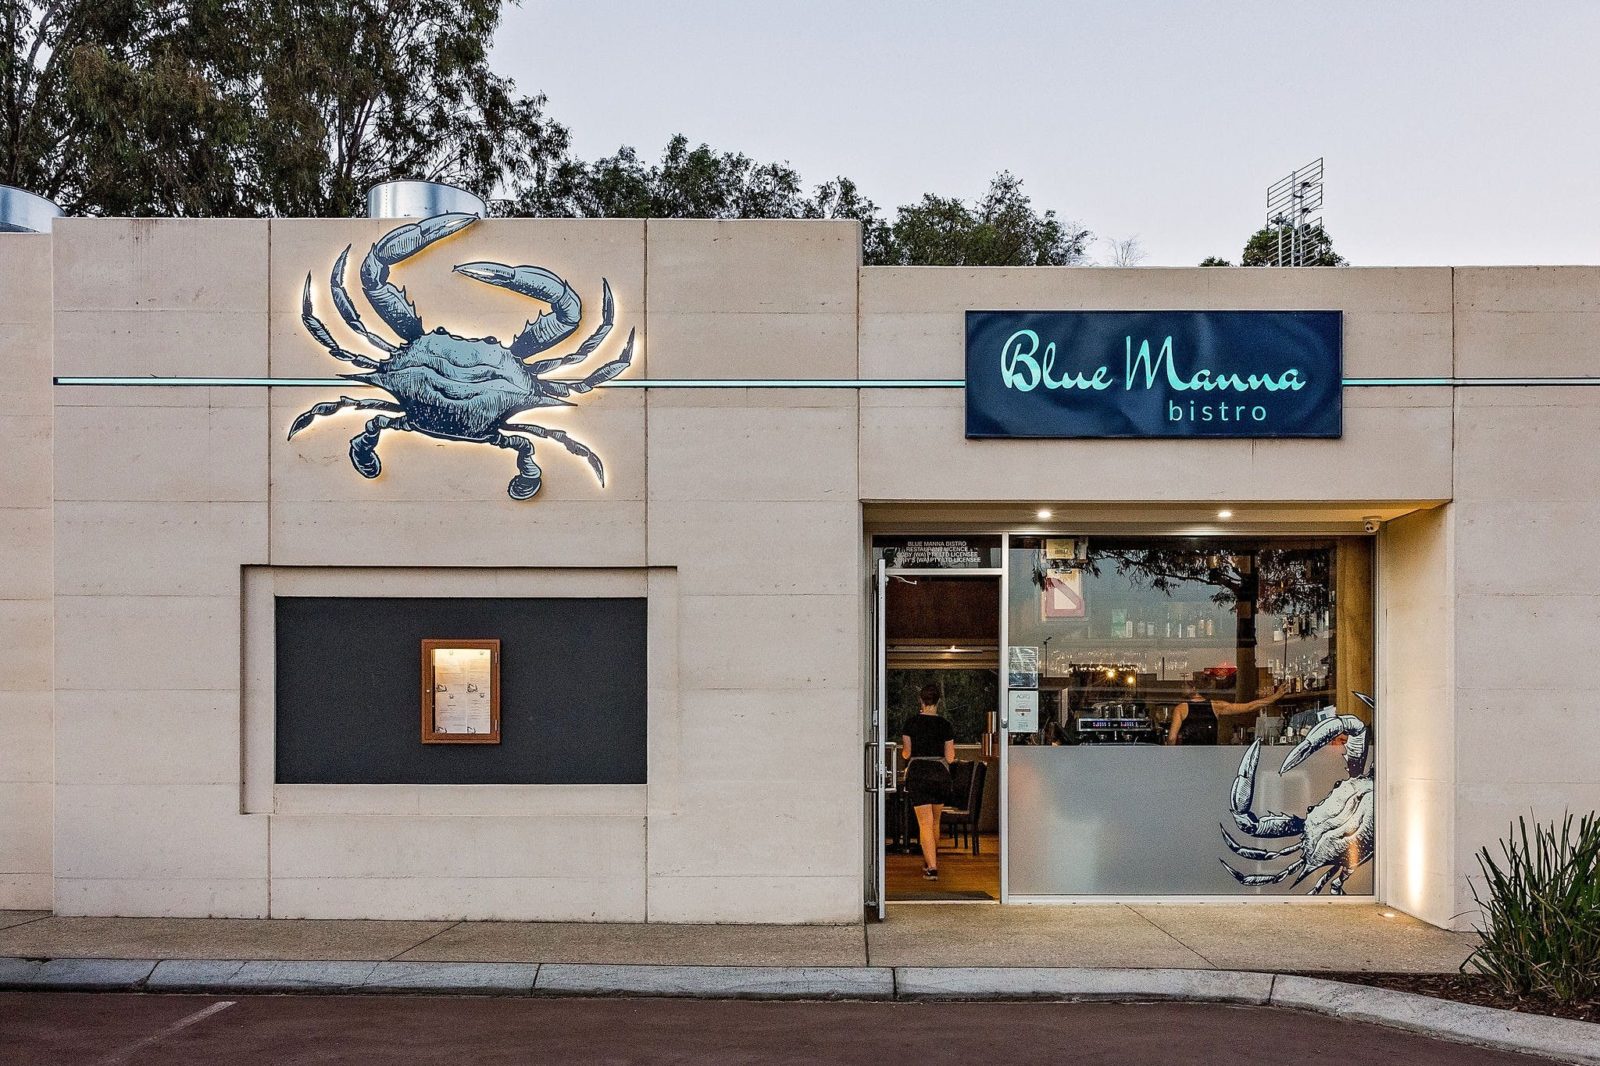 Blue Manna Bistro, Dunsborough, Western Australia